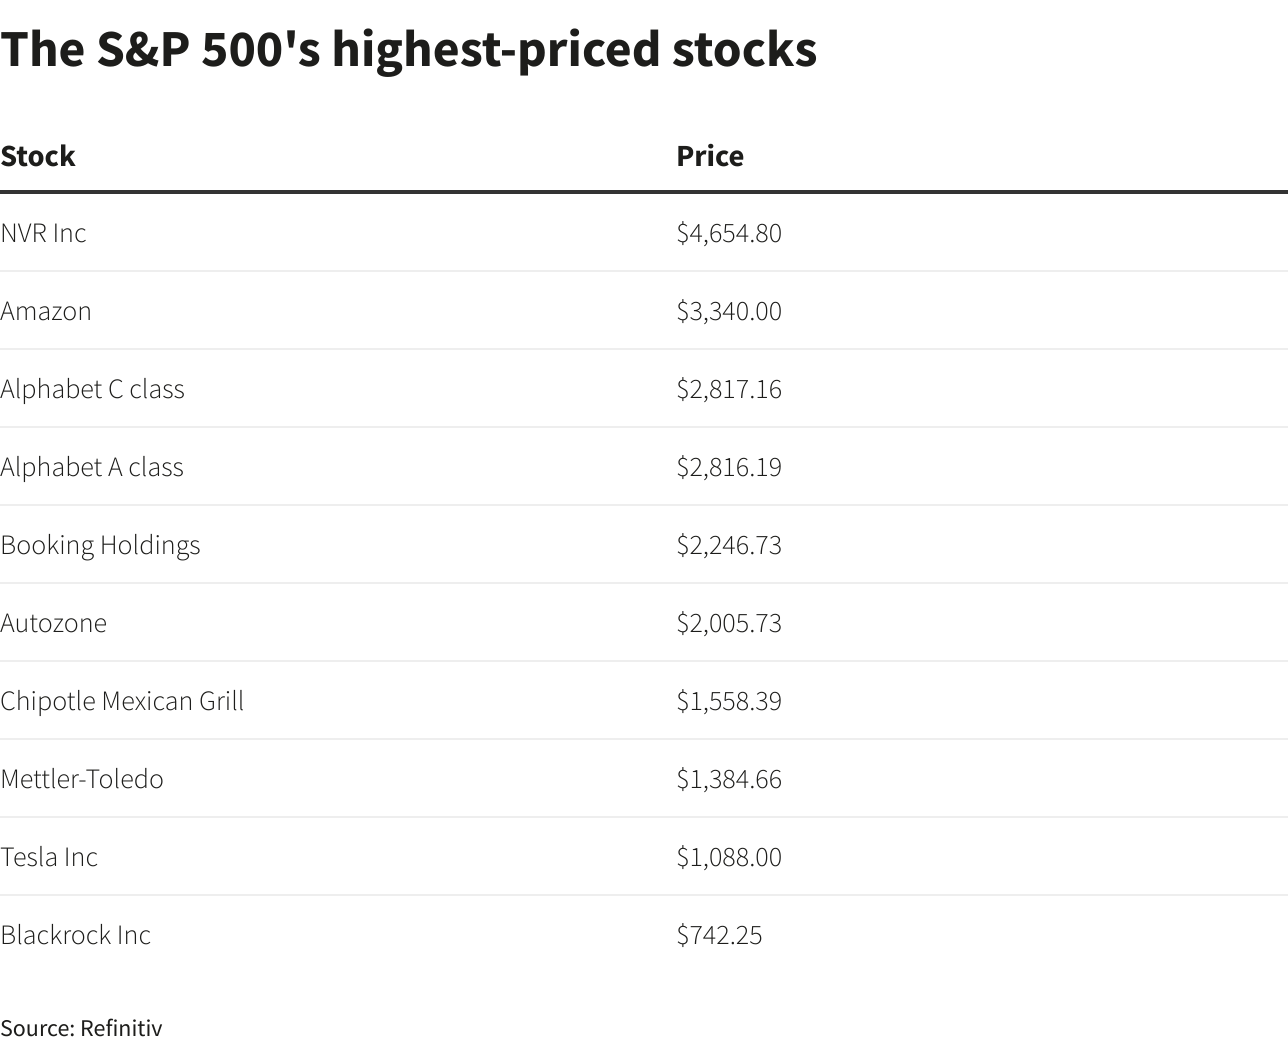 Die besten S&P 500-Aktien